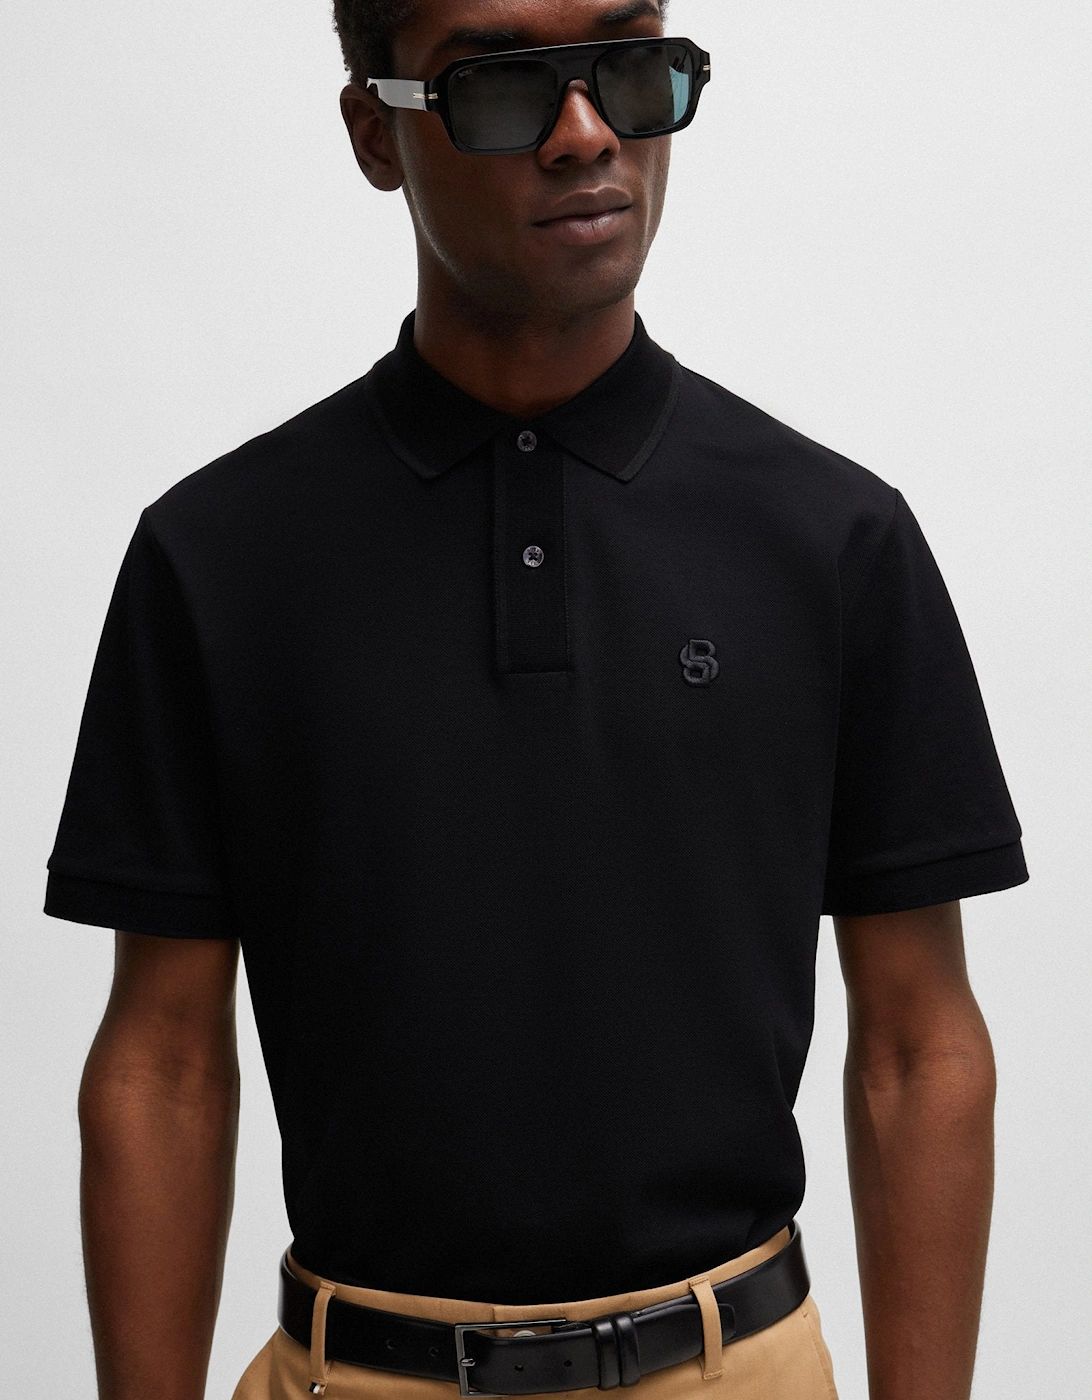 BOSS Black Parlay 210 Polo Shirt 10259941 001 Black